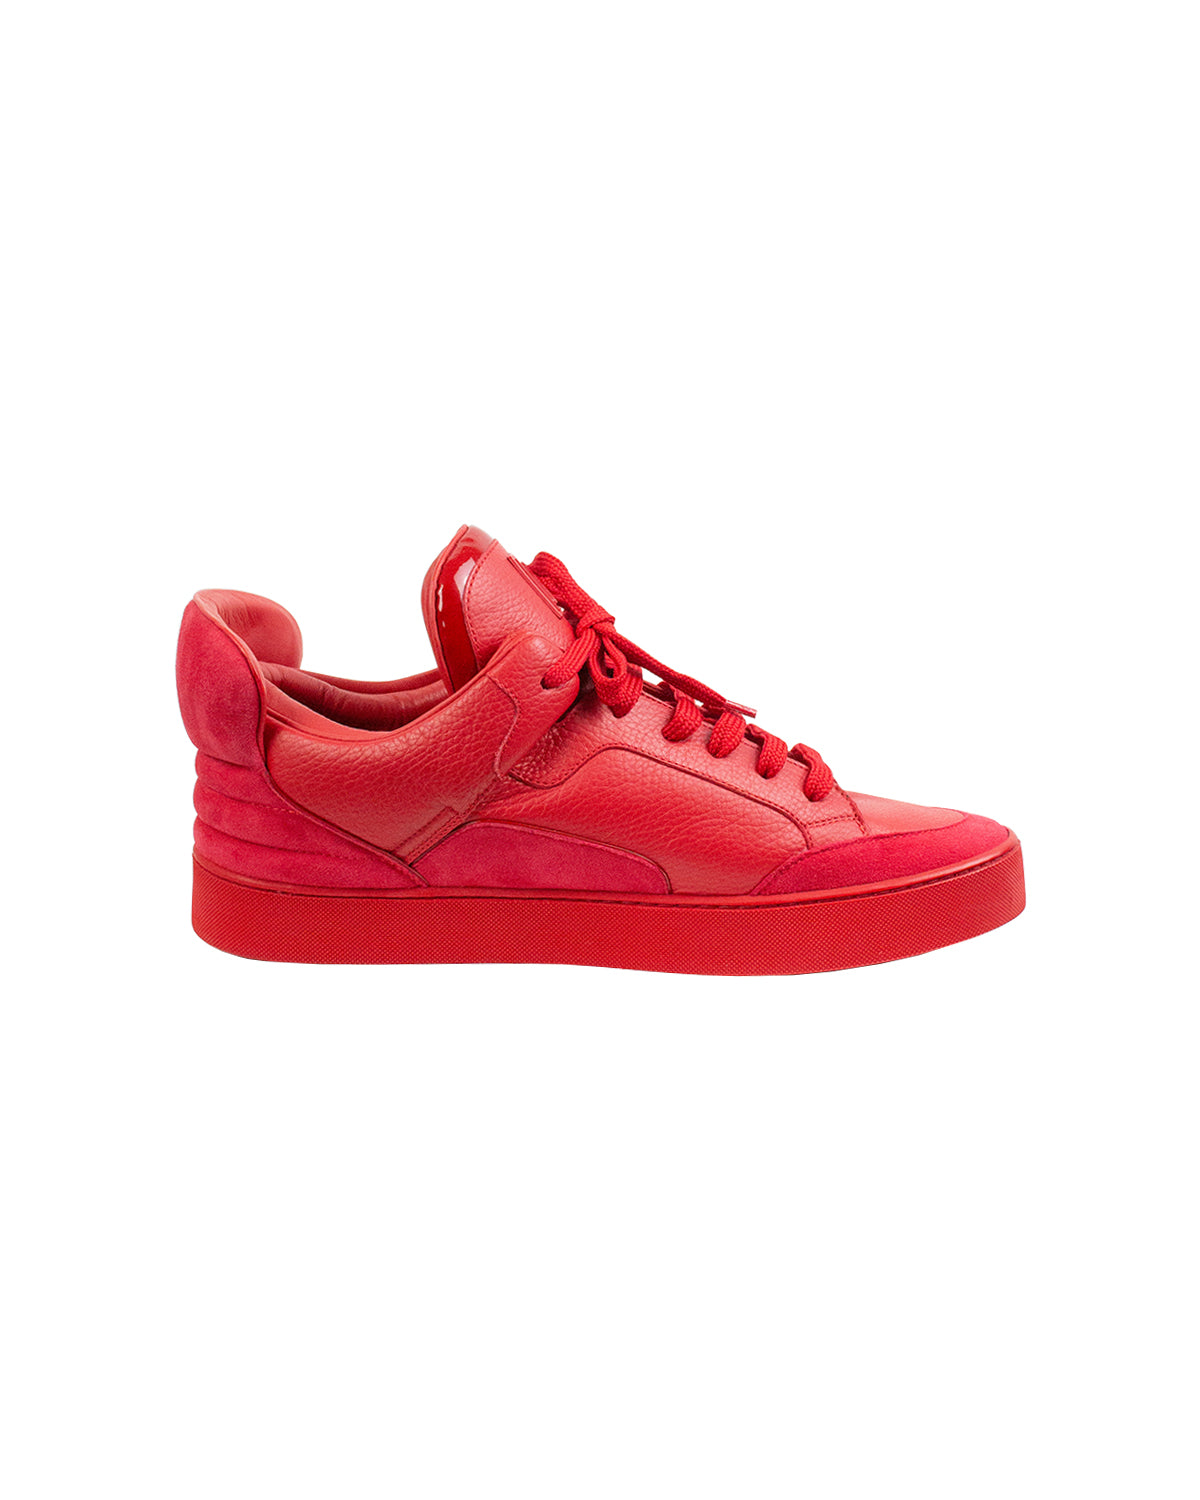 Kanye West x Louis Vuitton Don 'Red', Men's Fashion, Footwear on